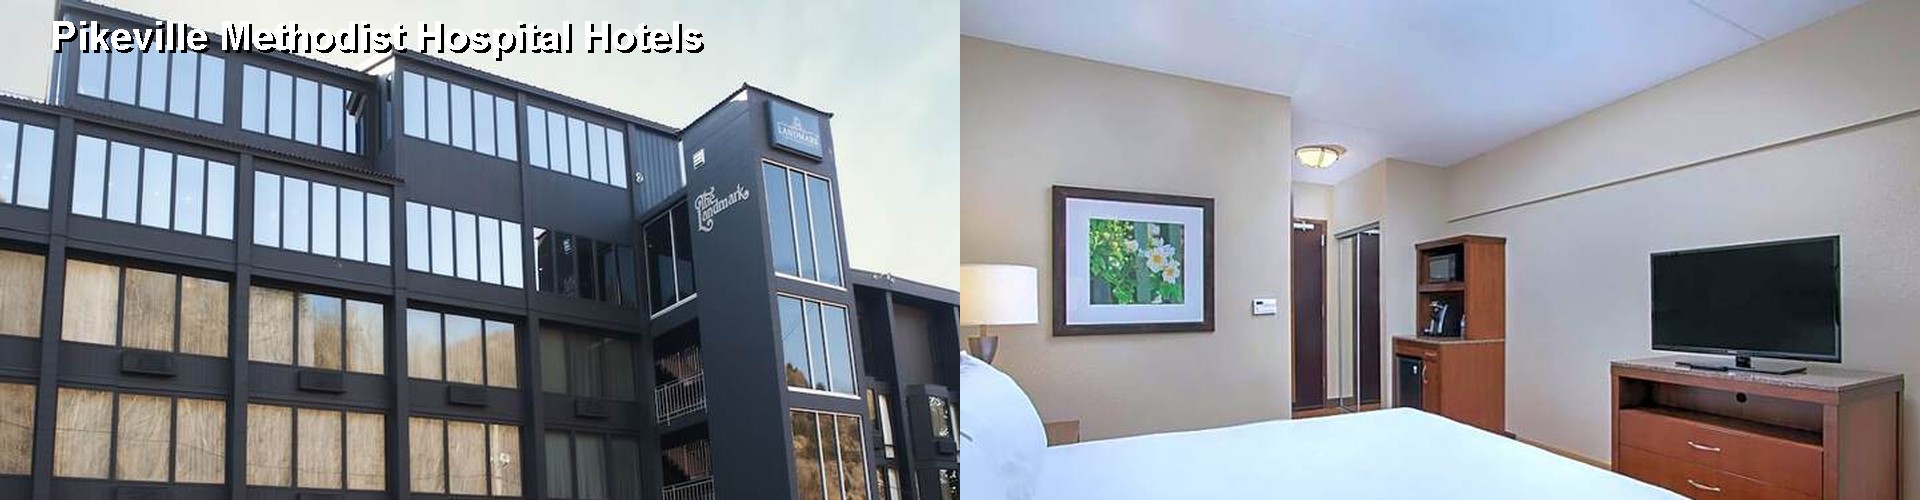 5 Best Hotels near Pikeville Methodist Hospital